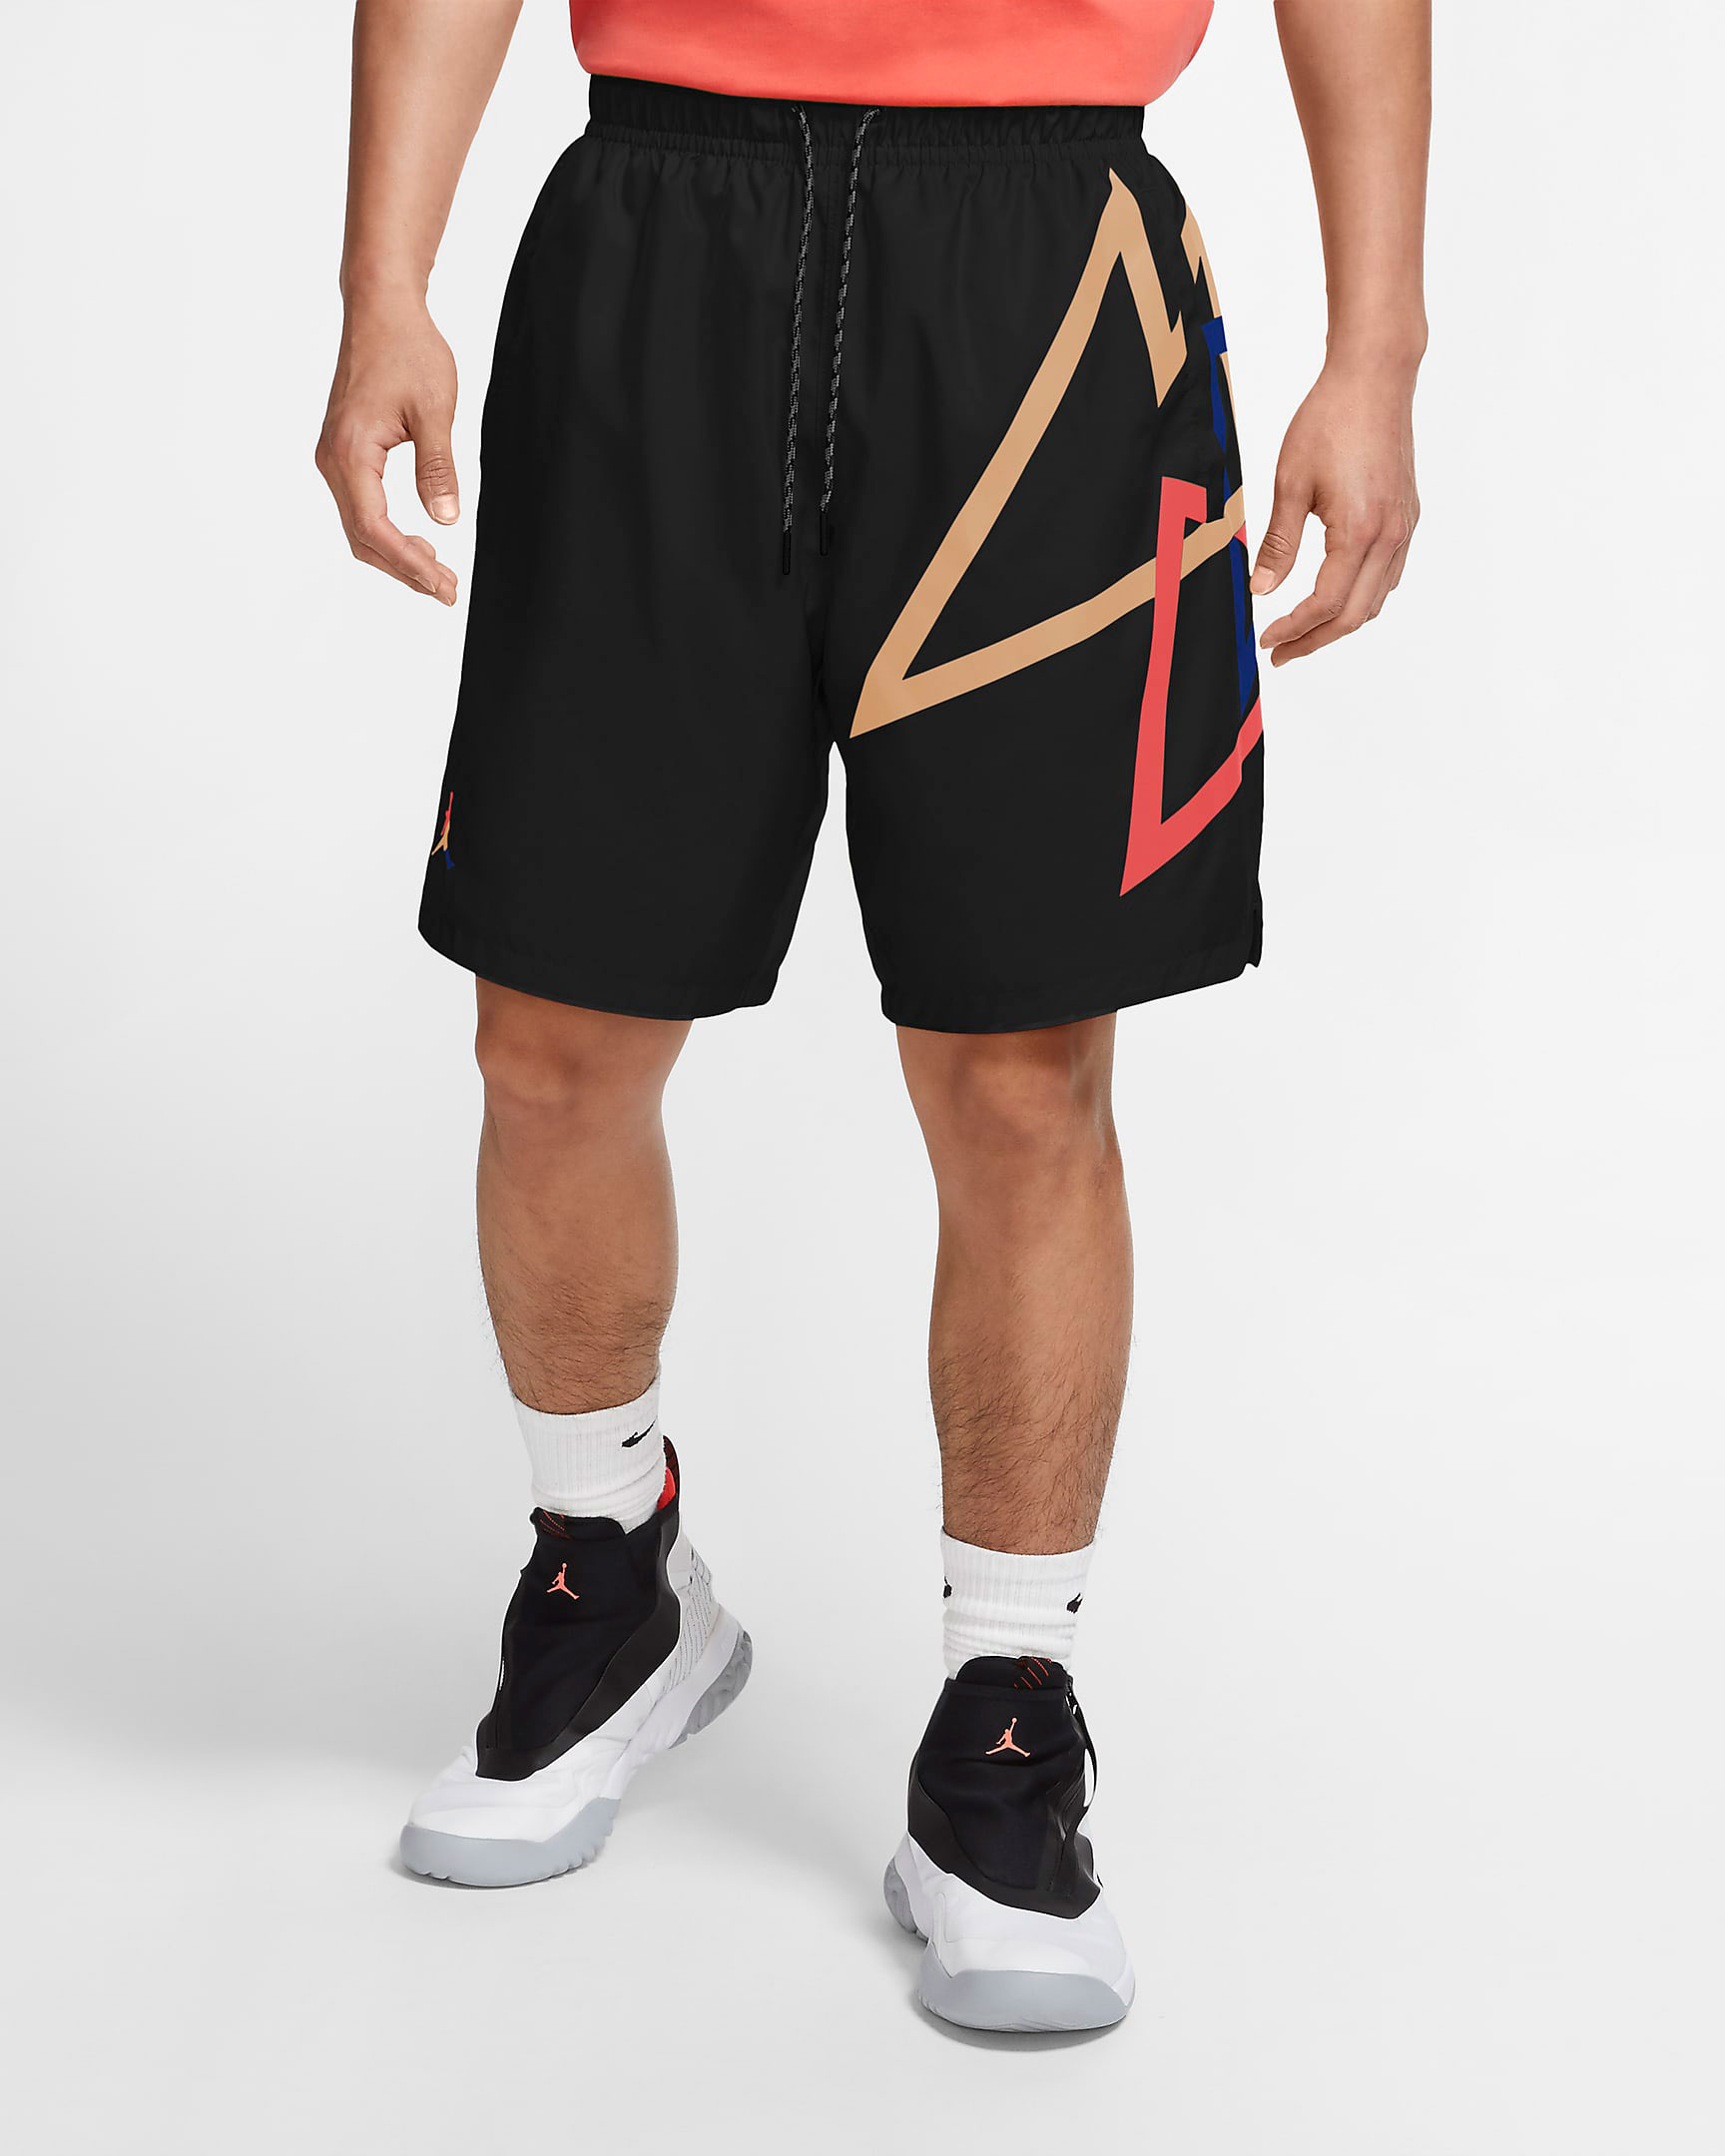 Jordan Sport DNA Shorts | SneakerFits.com